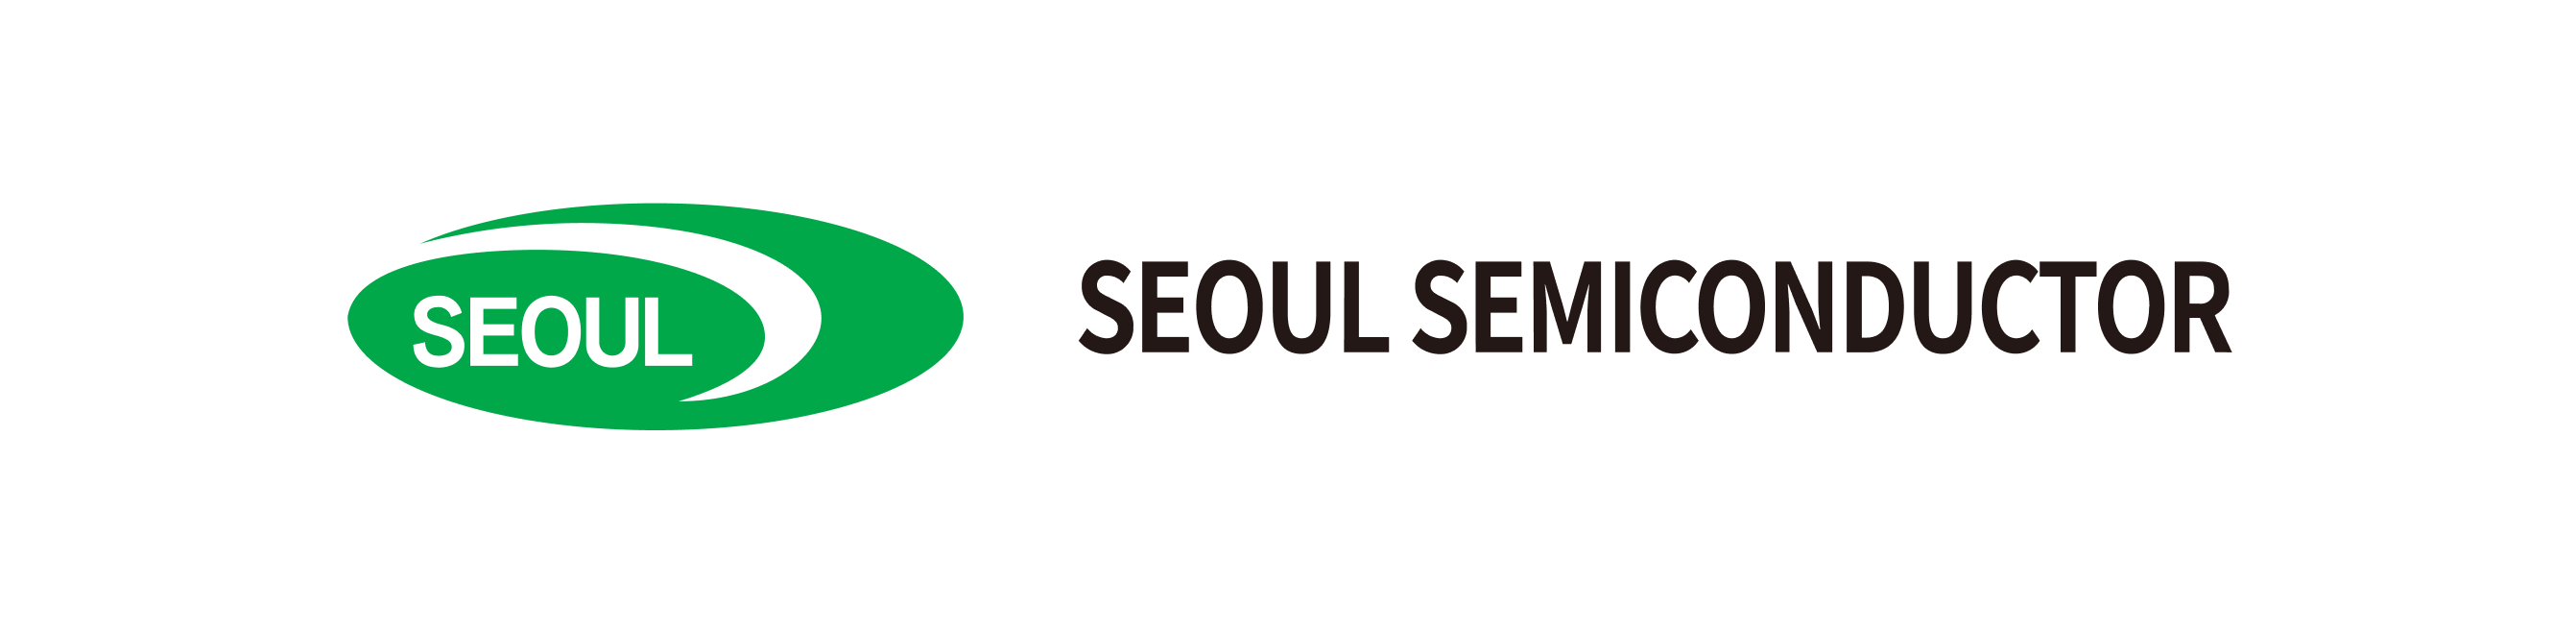 seoul_semiconductor